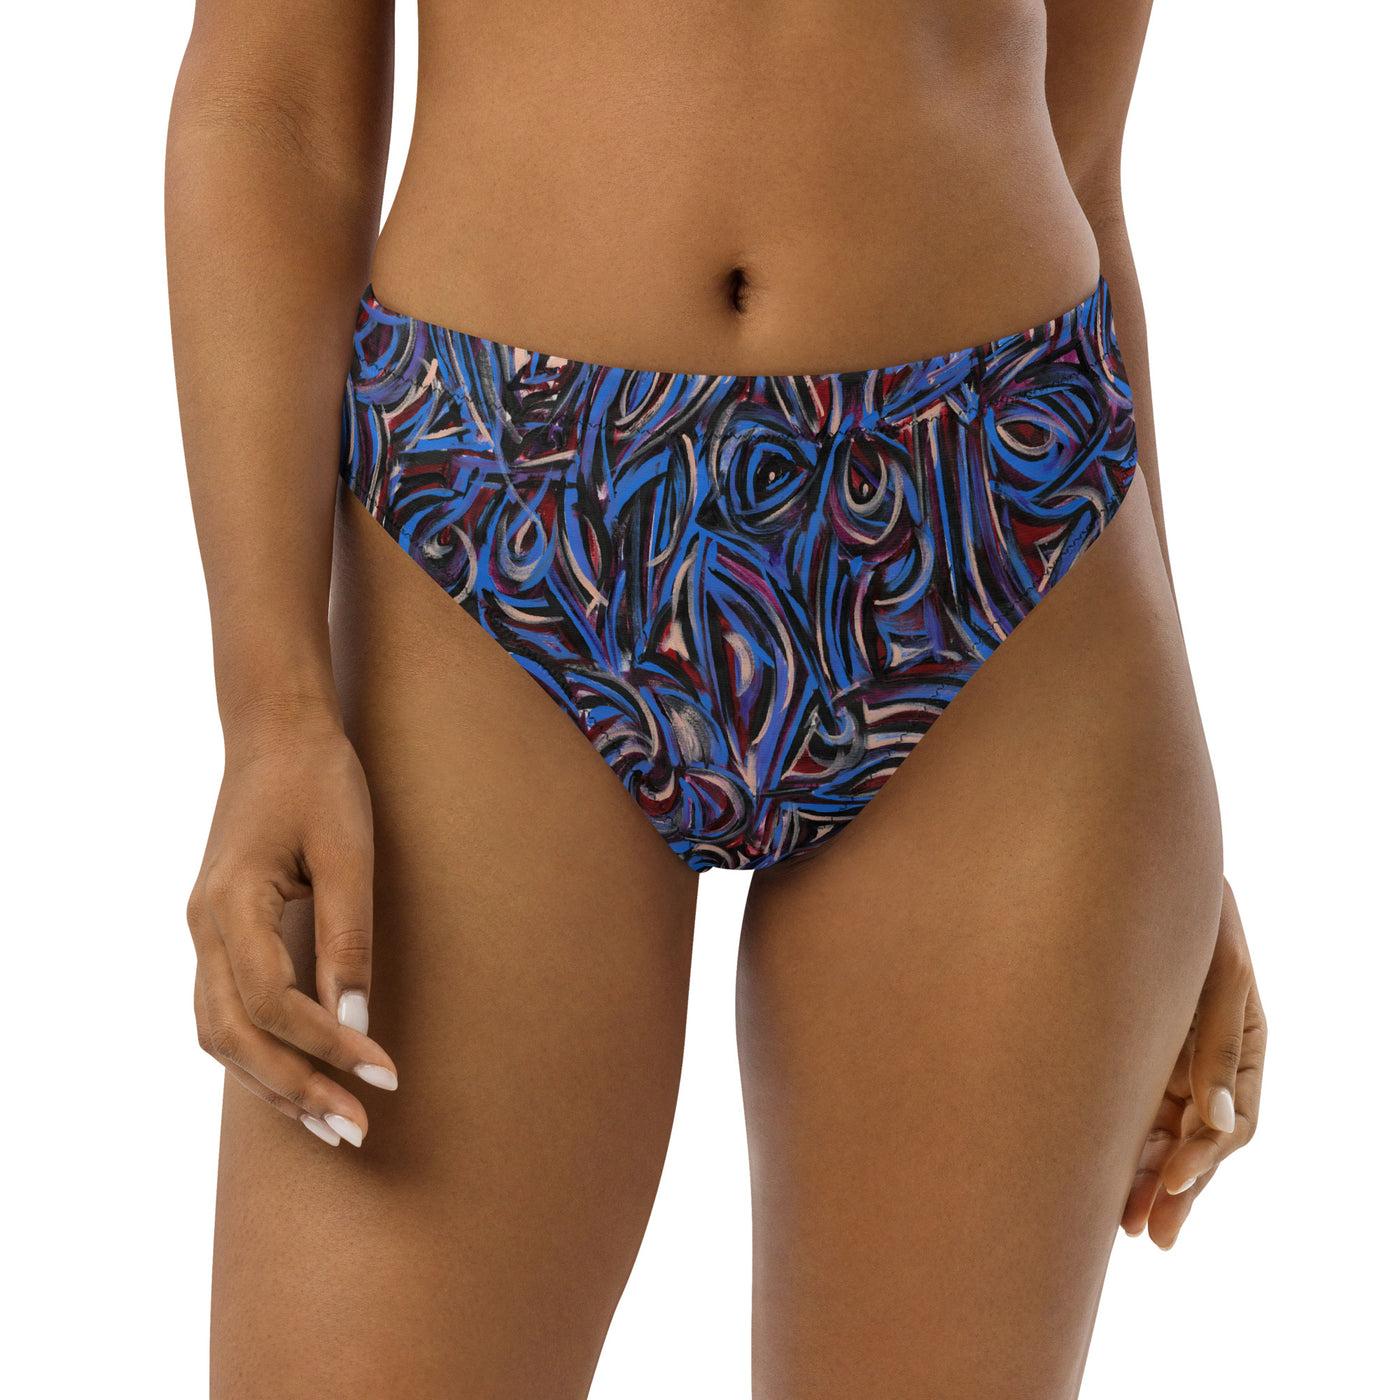 Sapphire Art Bikini Bottom